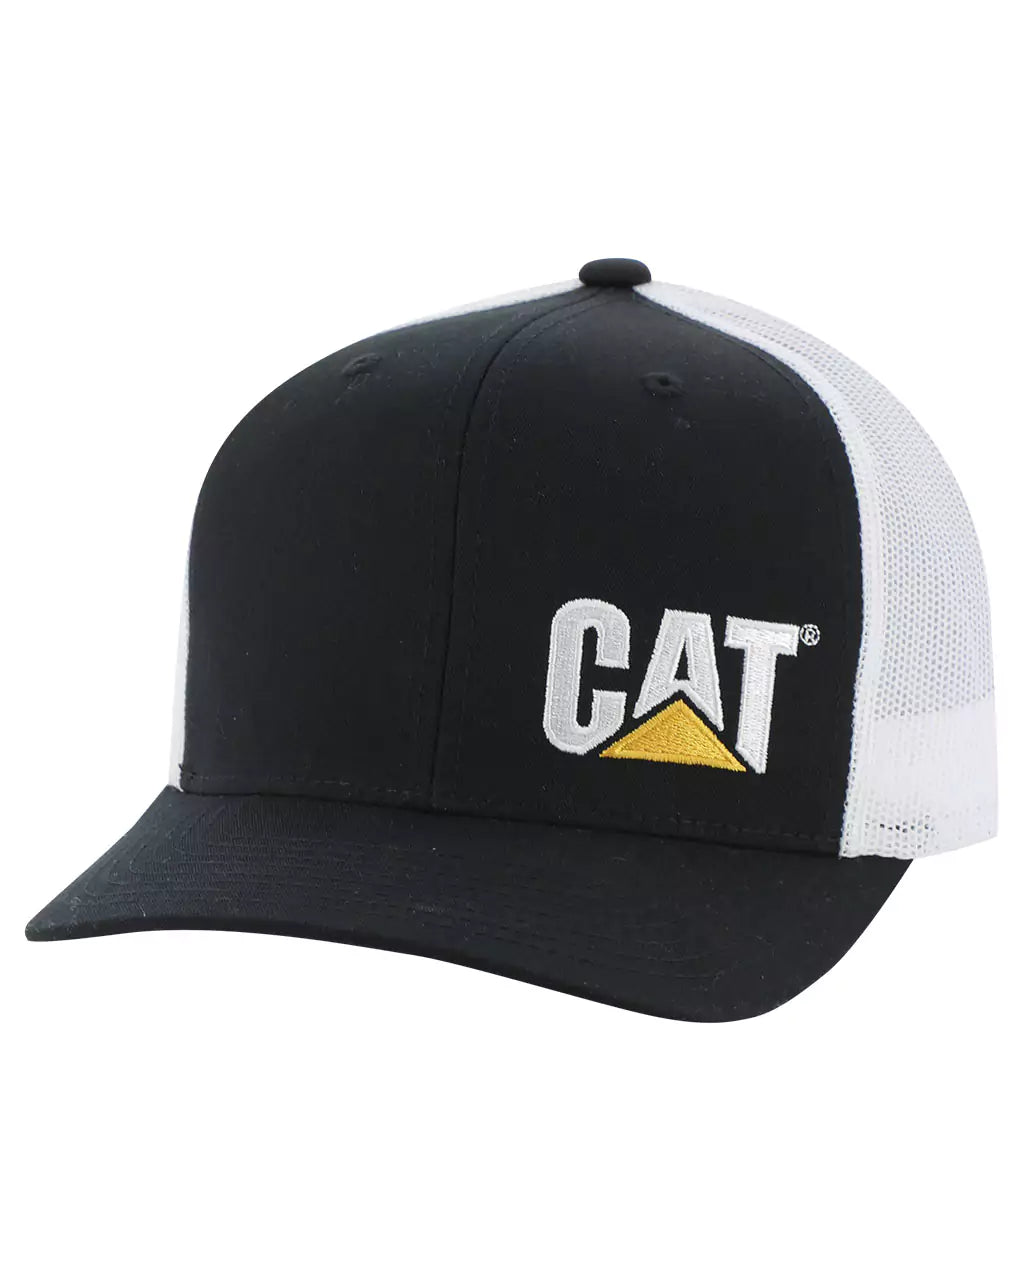 Baseball Hats Domestic Shorthair Cats Trucker Caps for Men Vintage Cotton  Snapbacks